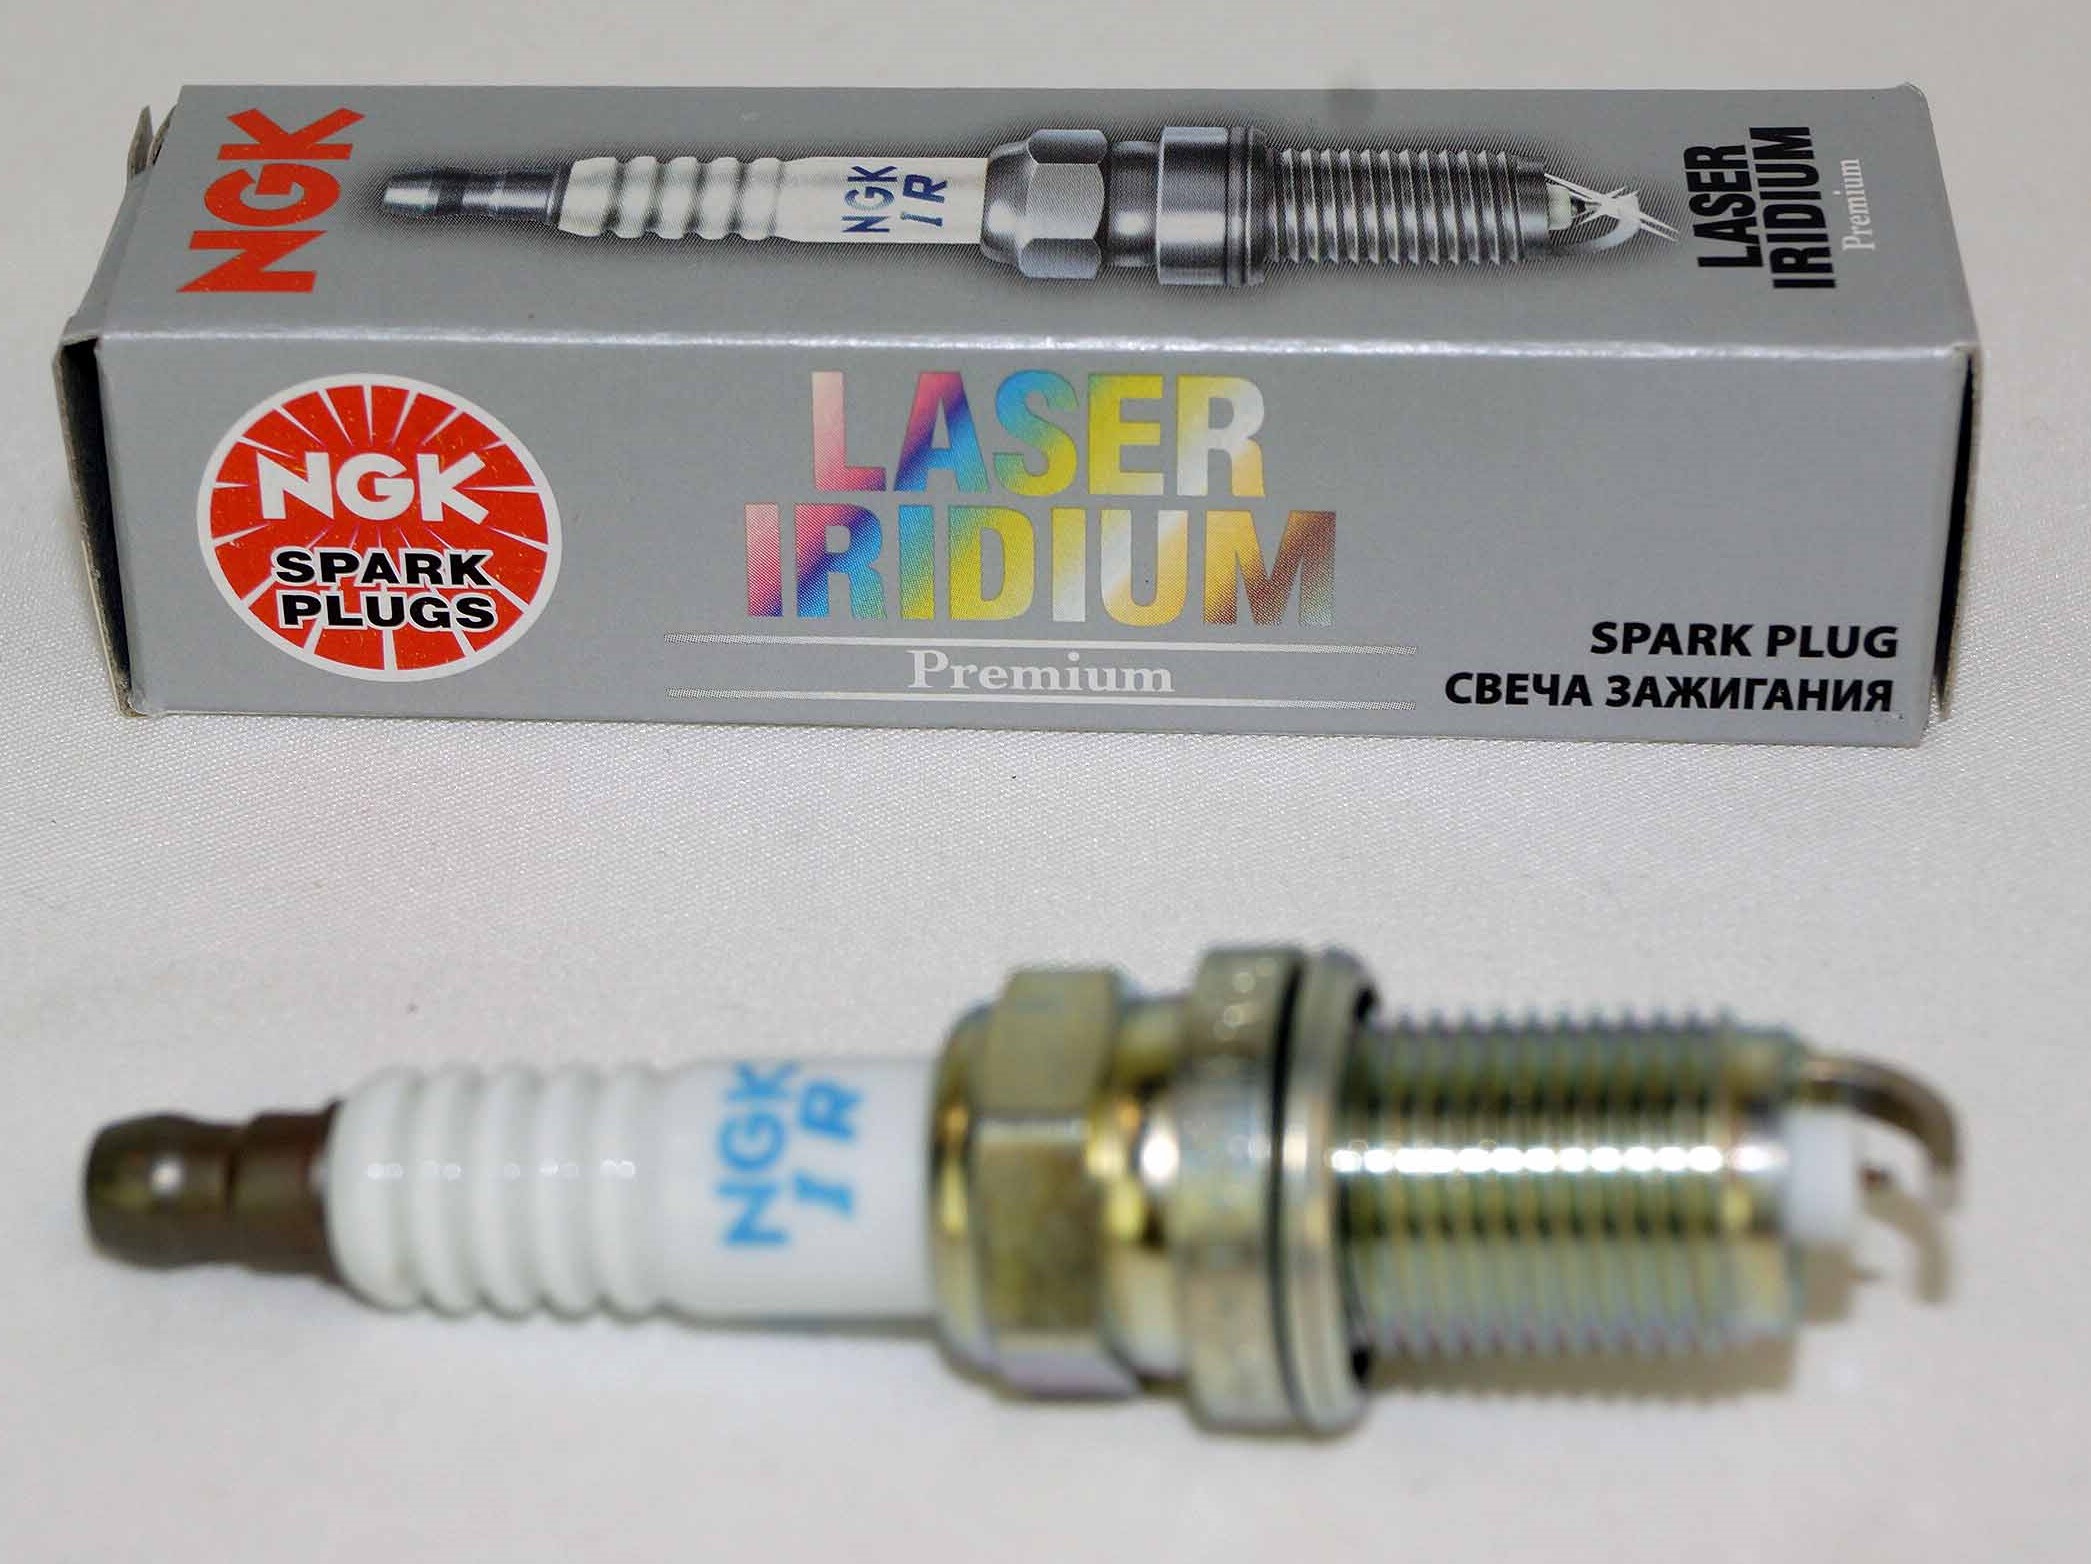 6 x NGK Laser Iridium Spark Plug IFR6T11 4589 